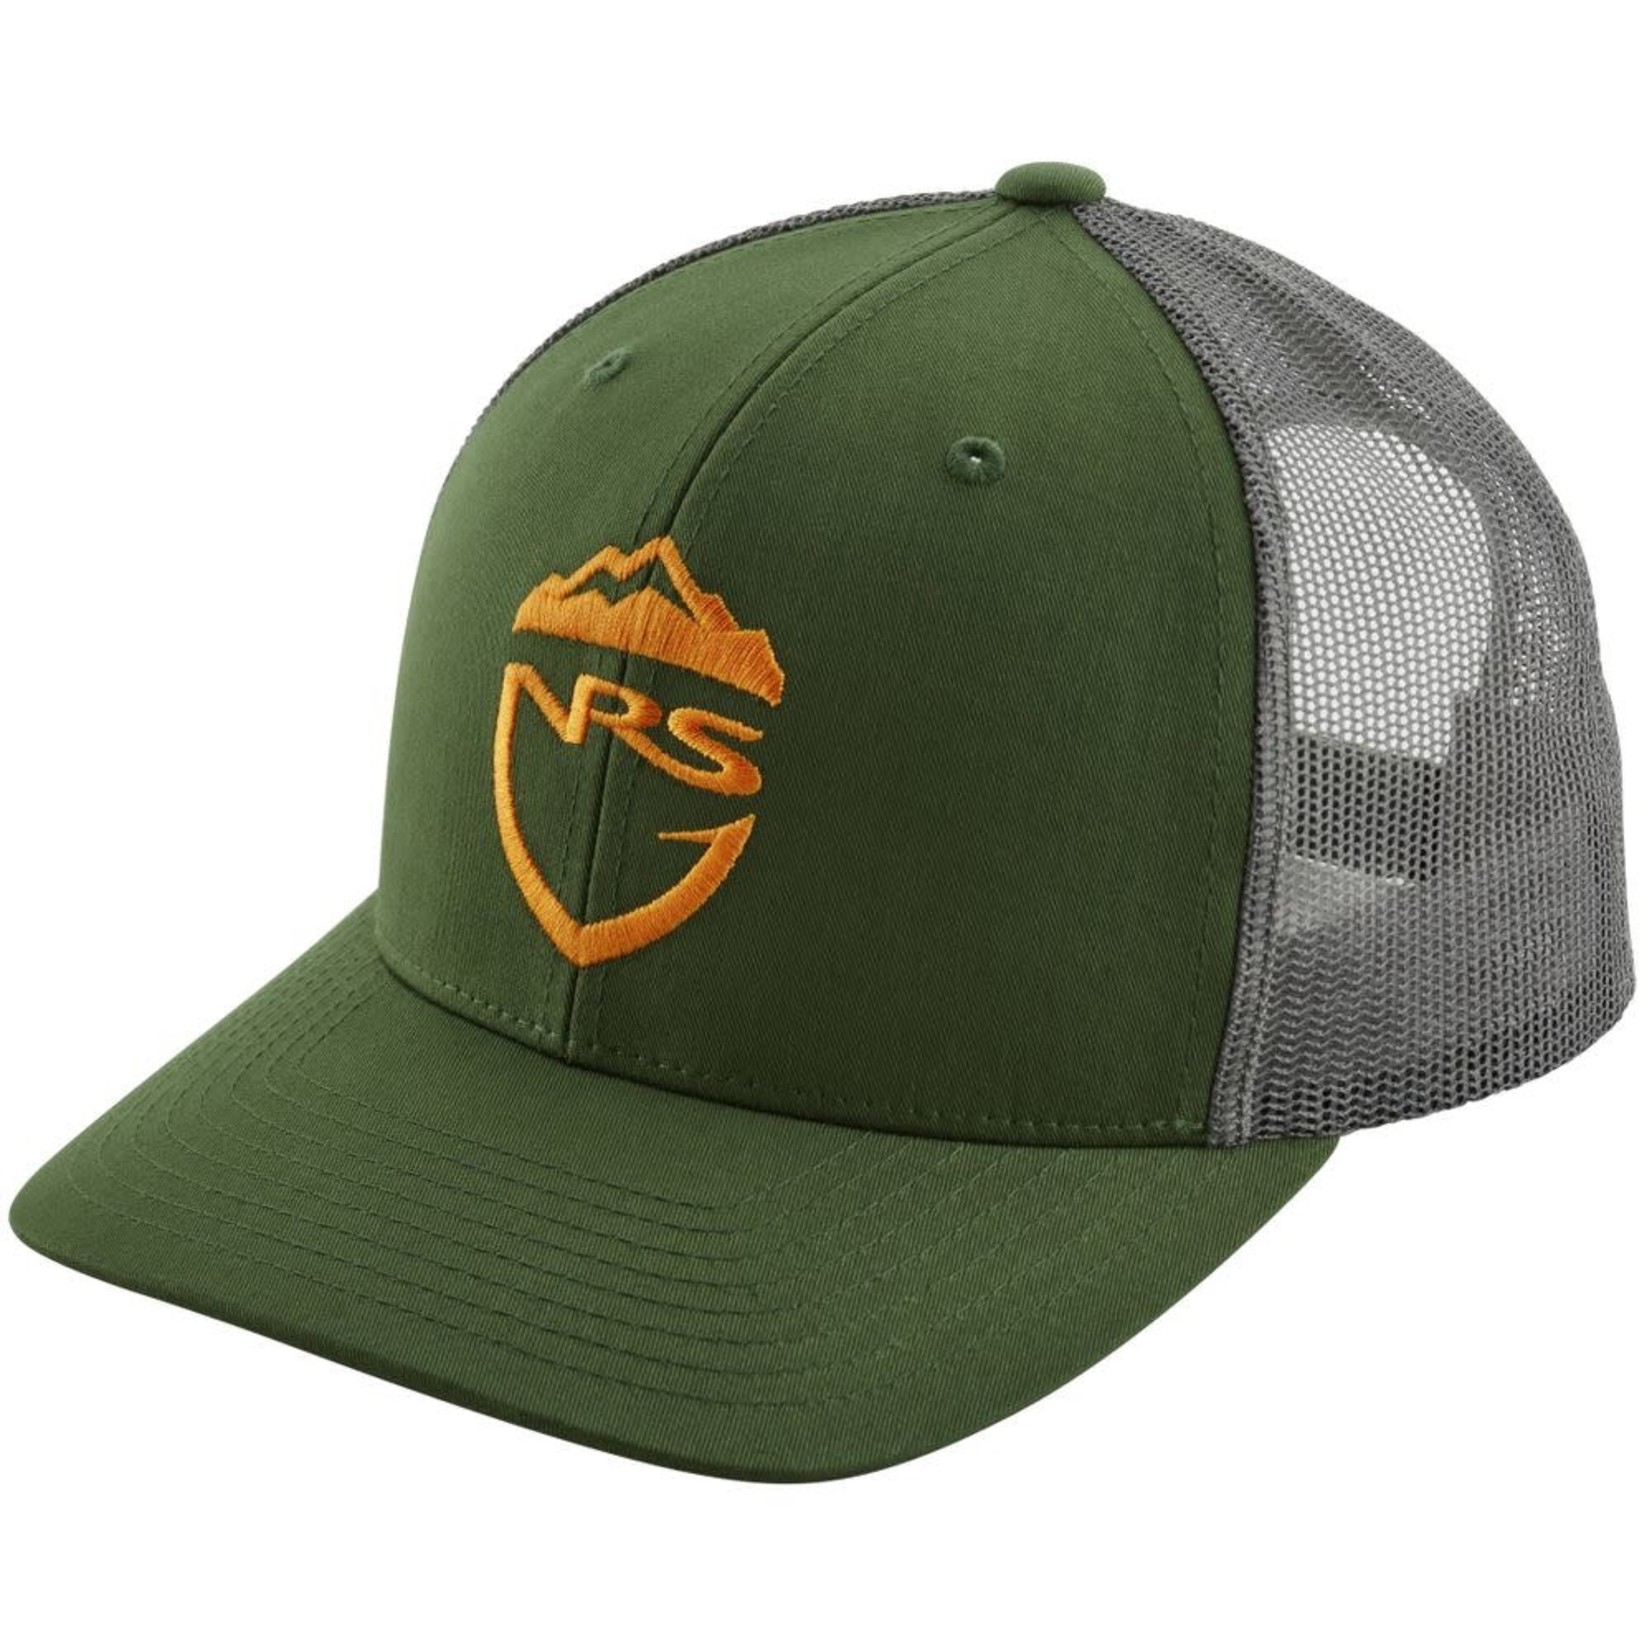 NRS NRS Fishing Trucker Hat